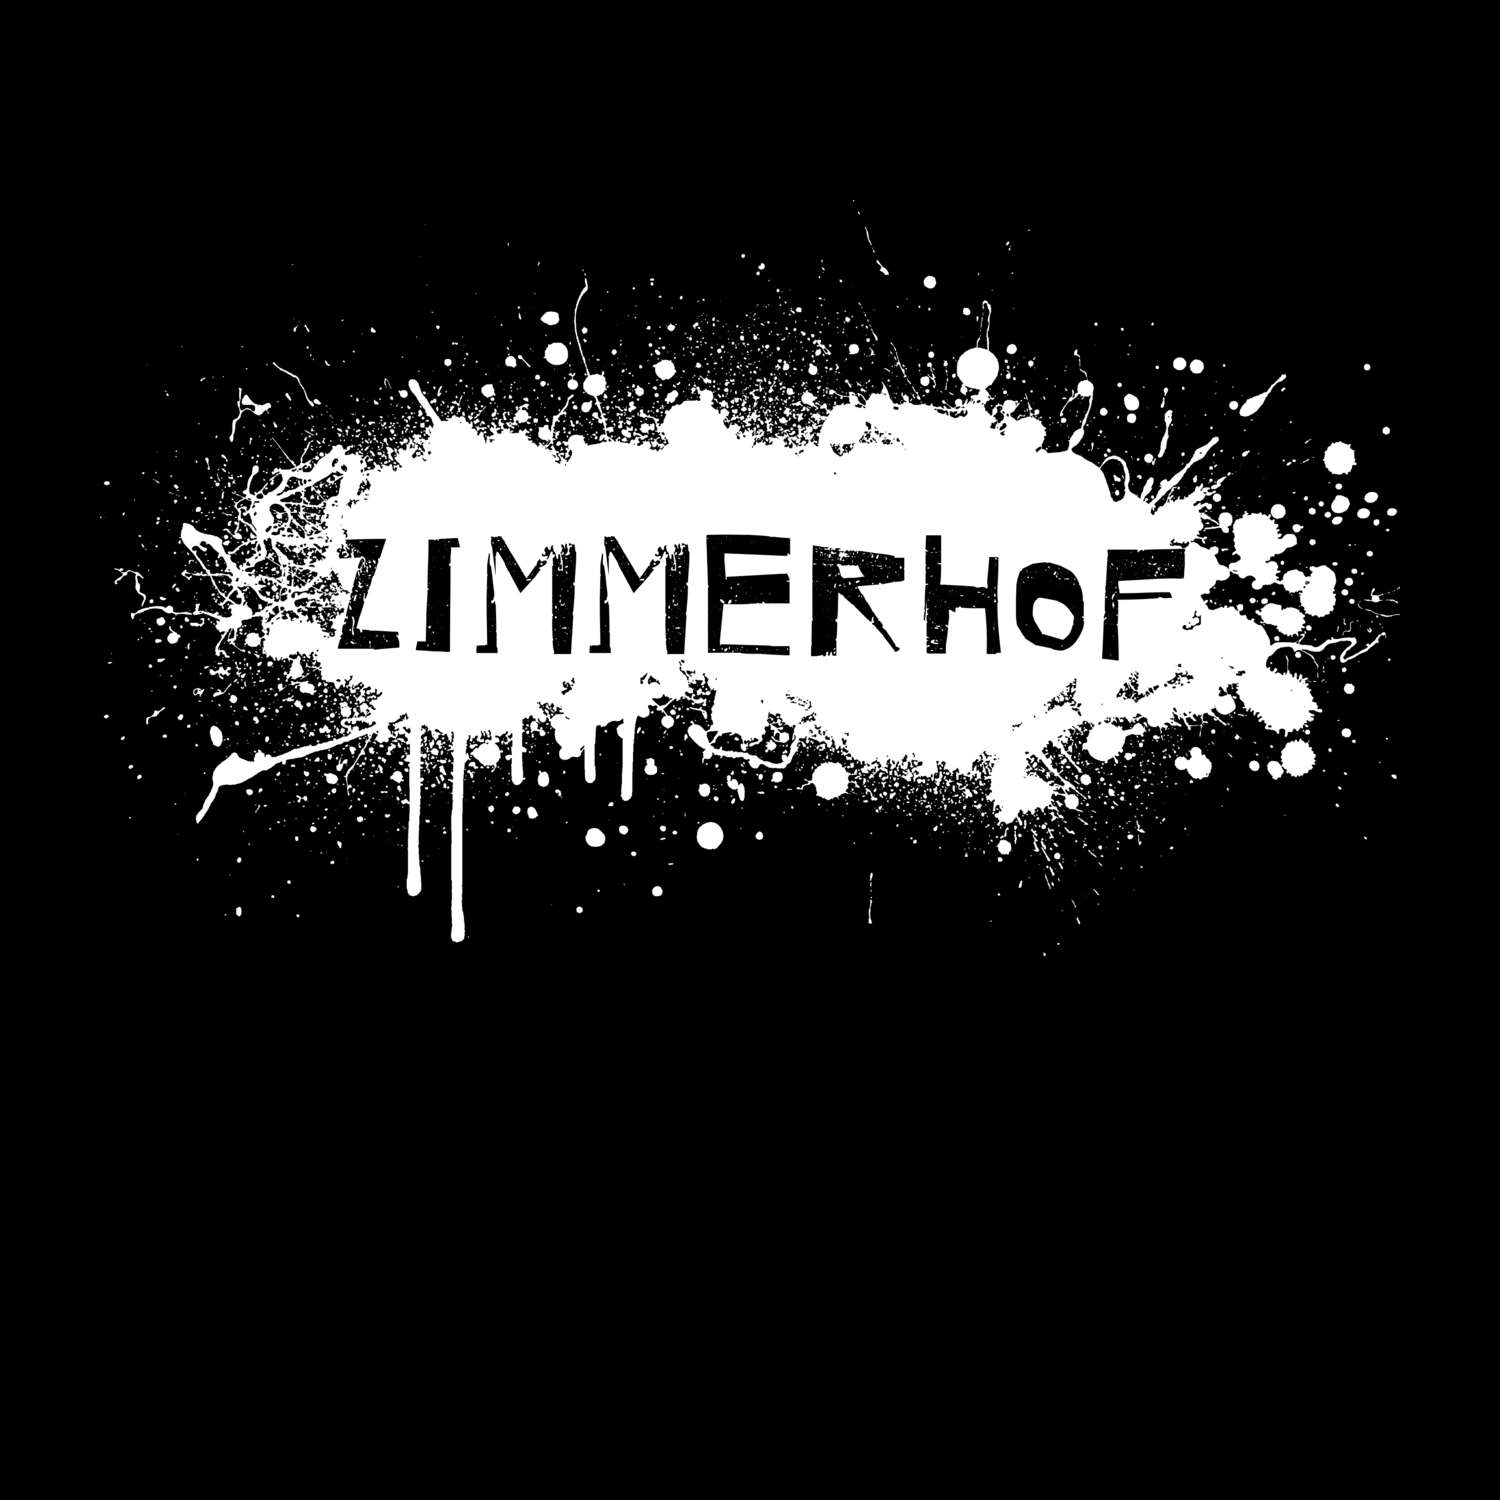 Zimmerhof T-Shirt »Paint Splash Punk«